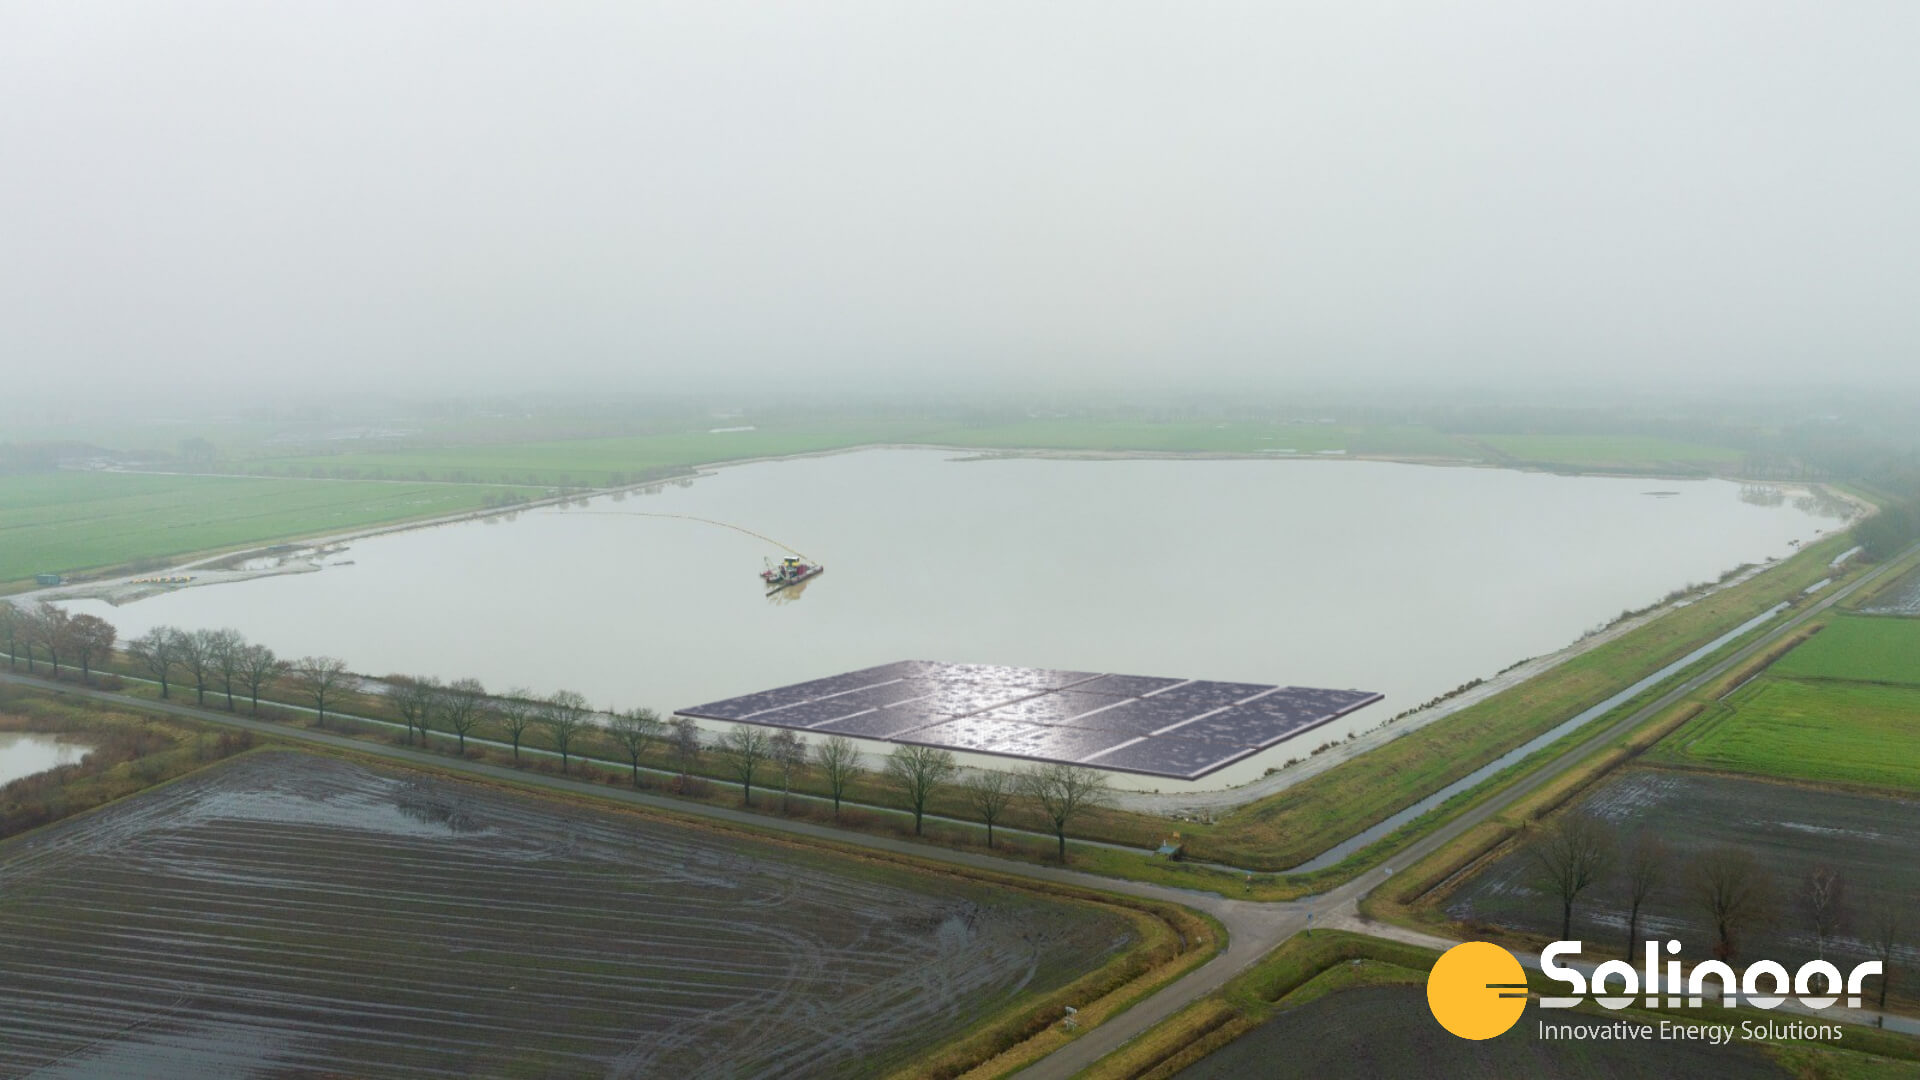 Ellertshaar zandwinning drijvend zonnepark 3D drone-view, Drenthe, Nederland